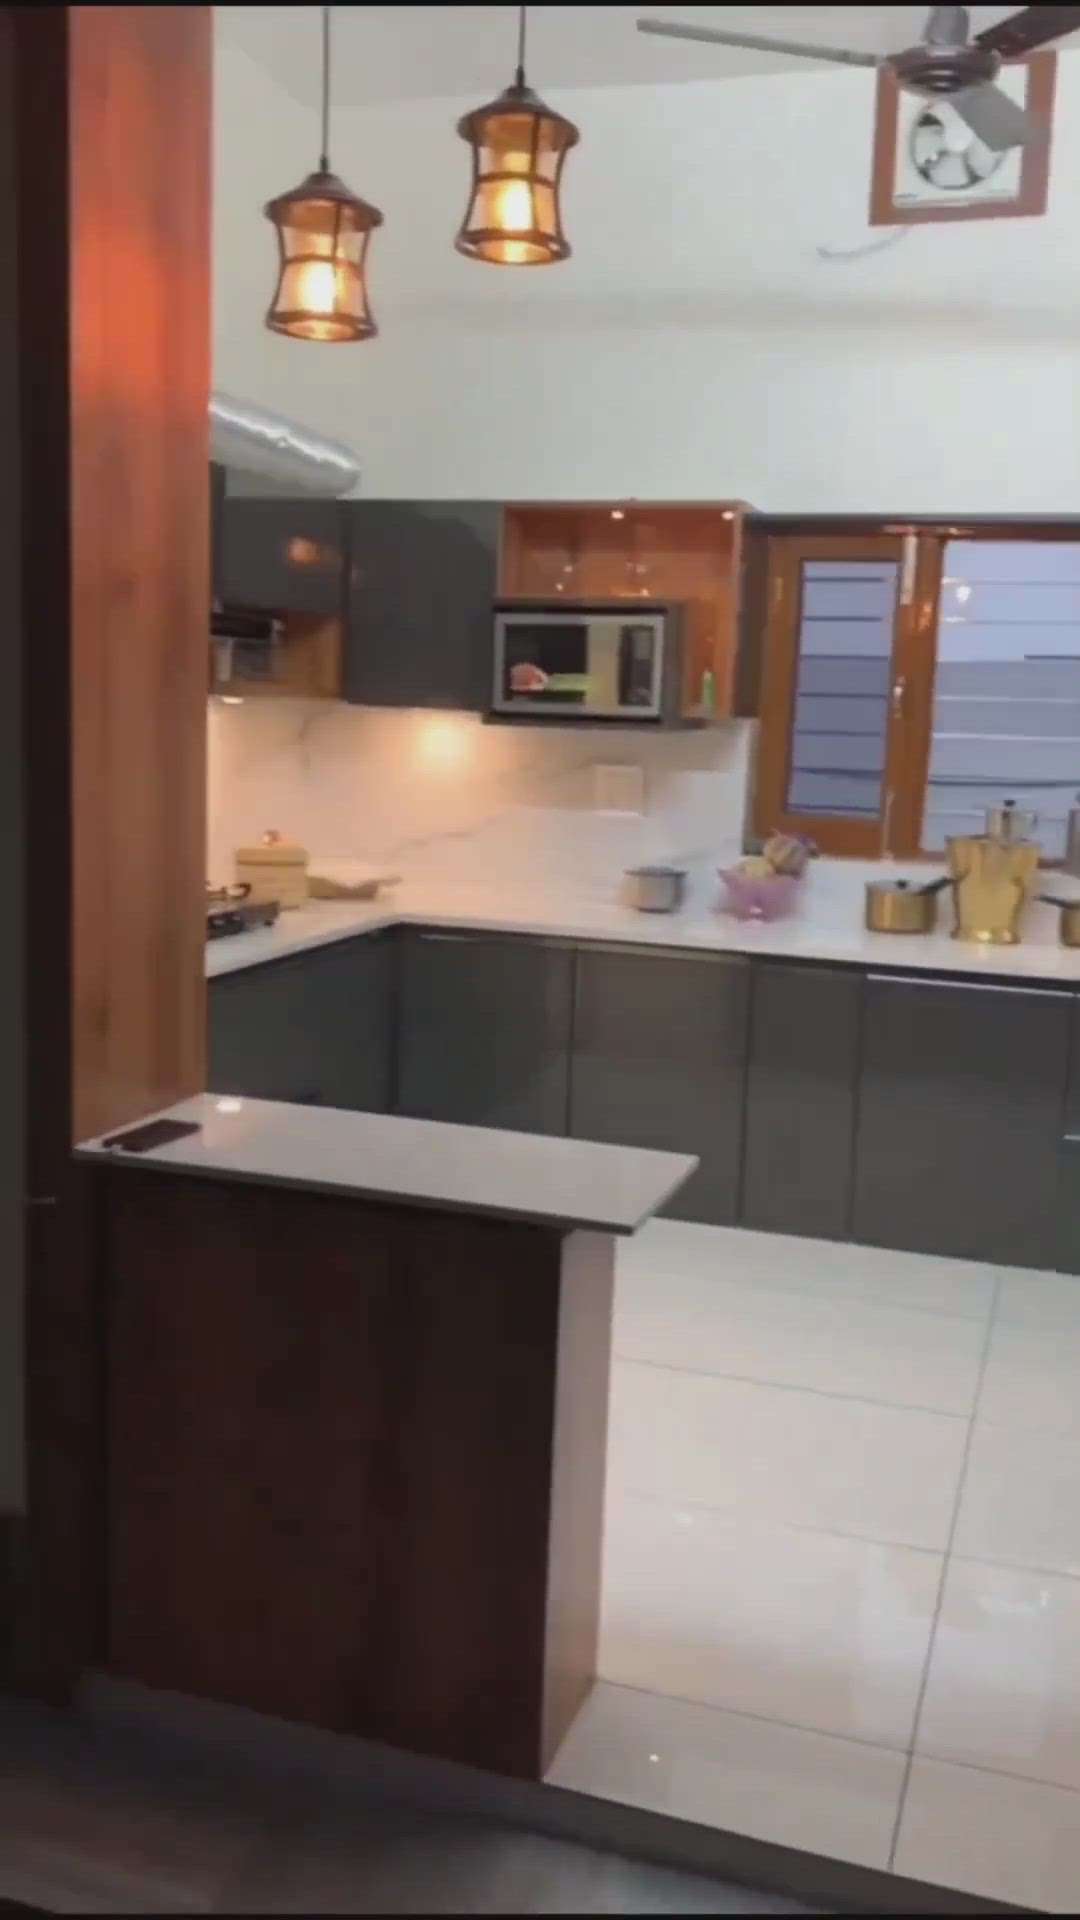 modular kitchen design cabinet ₹1300 per square feet with material maximum quality #kitchen #akilcarpenter